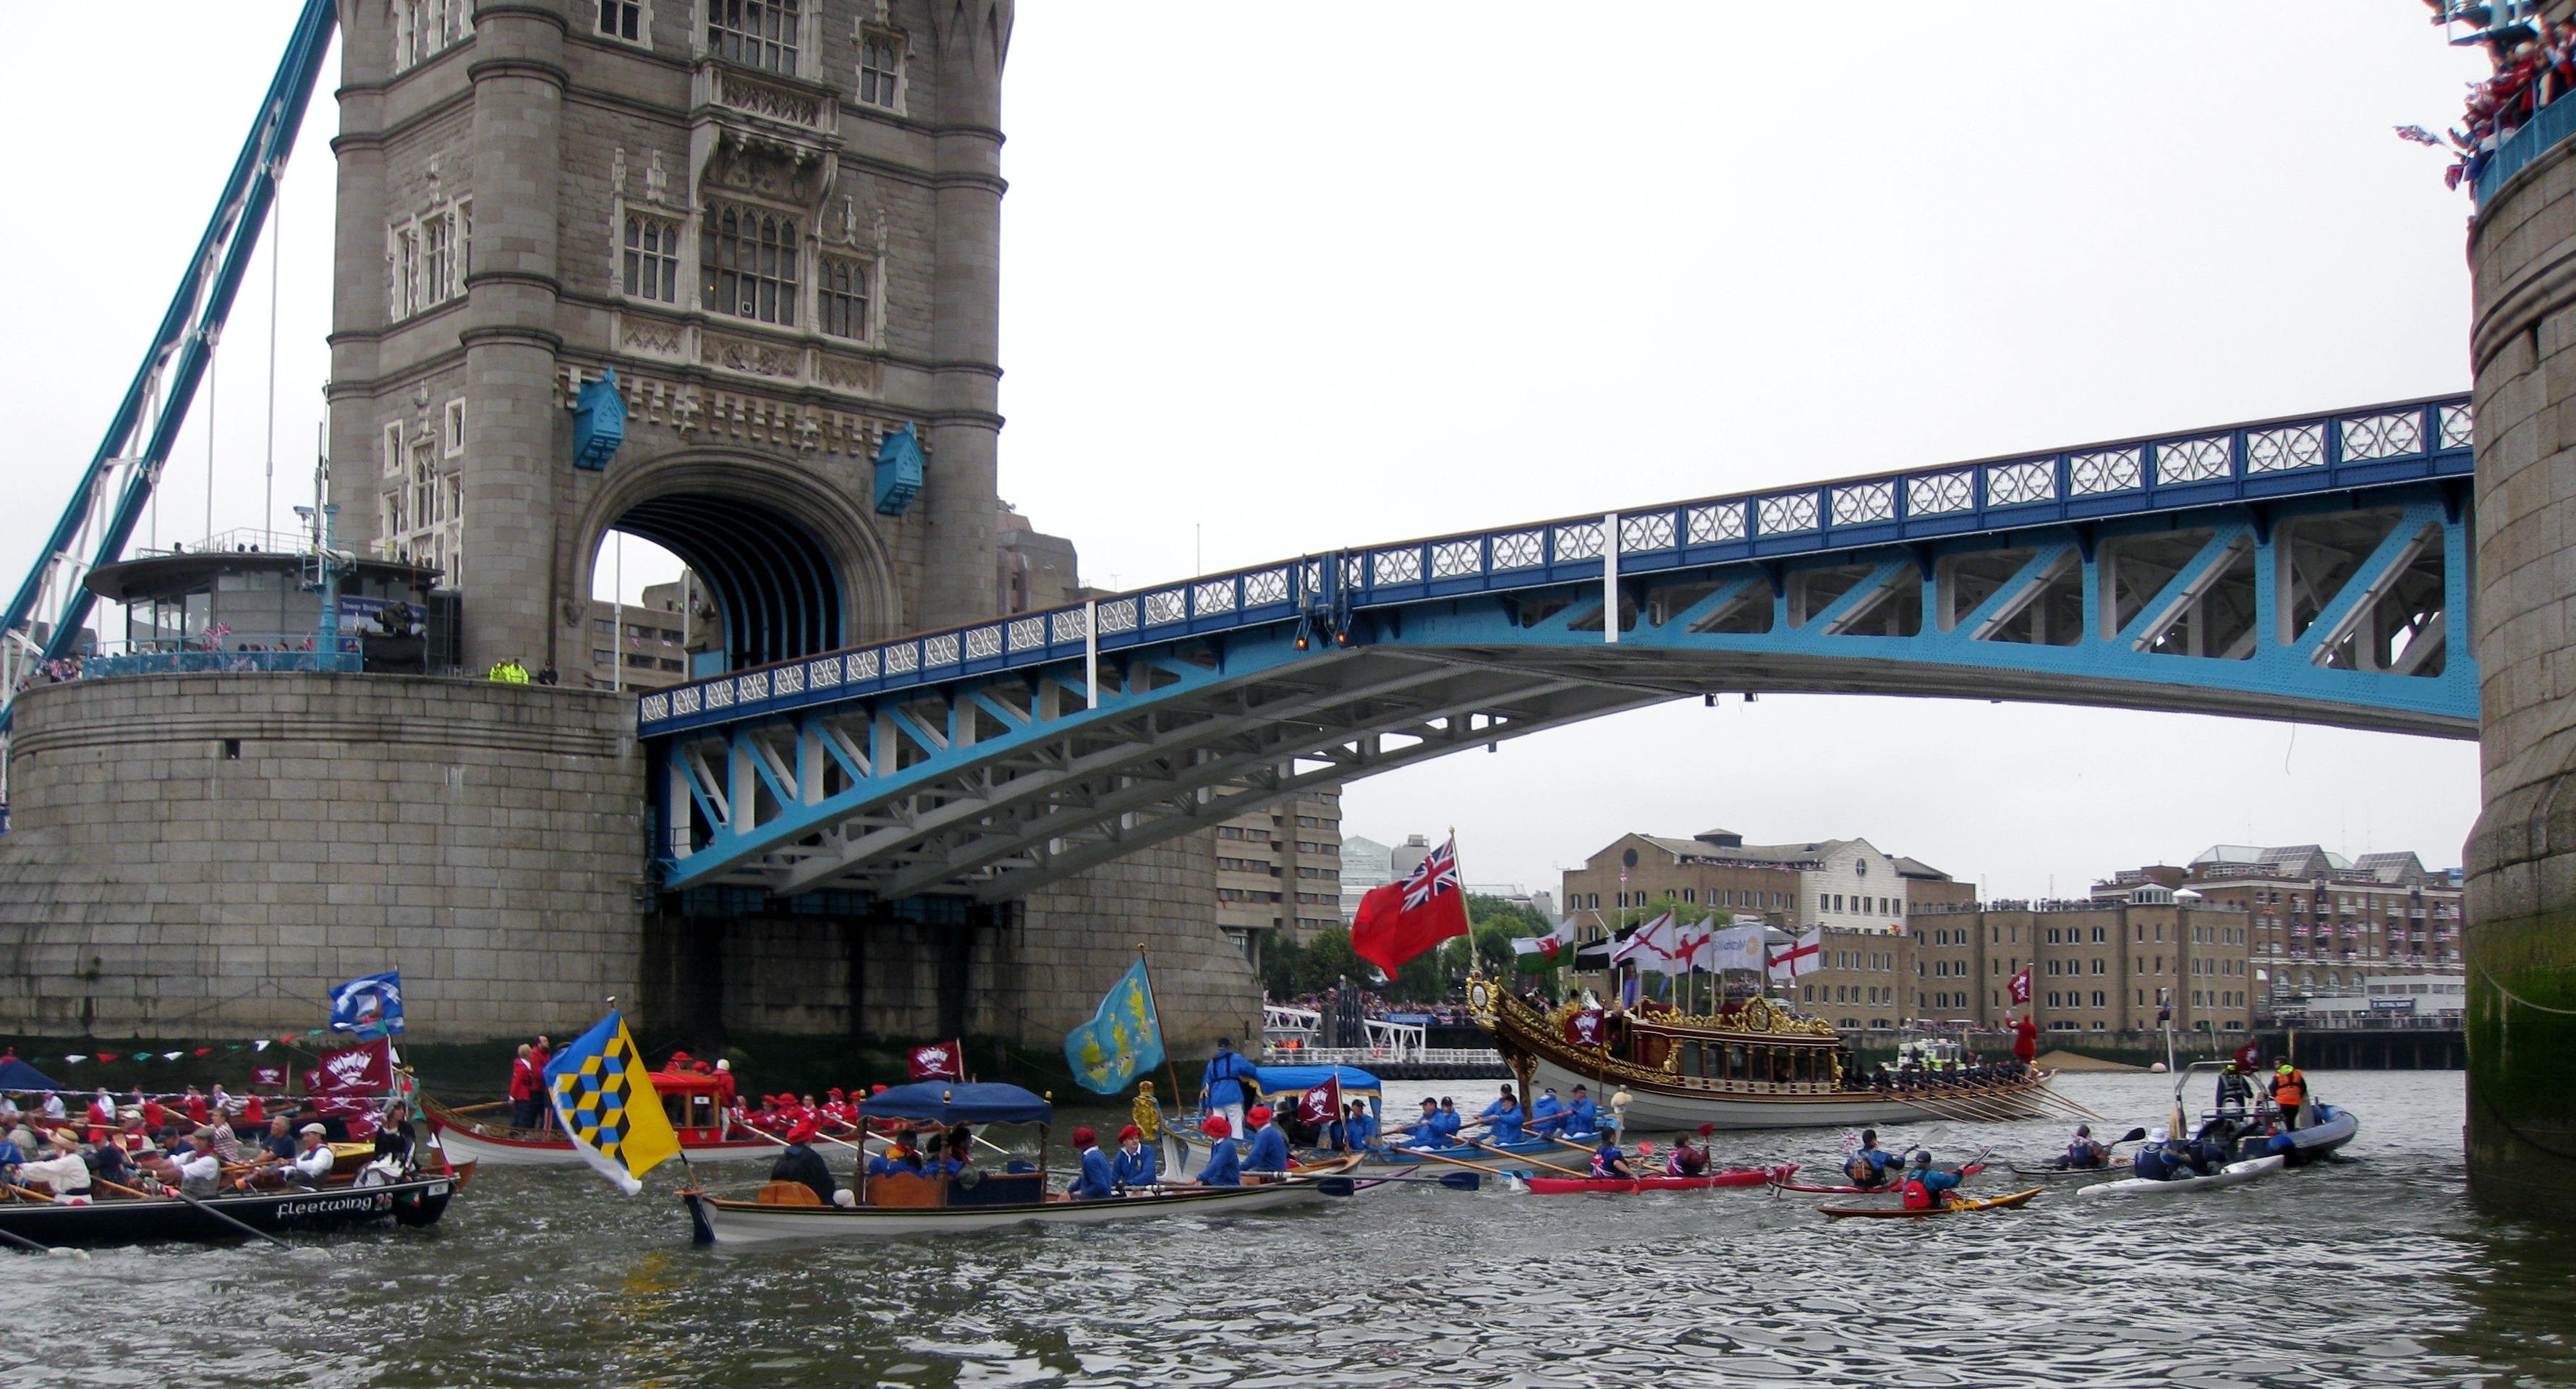 Flotilla Under Tower Bridge